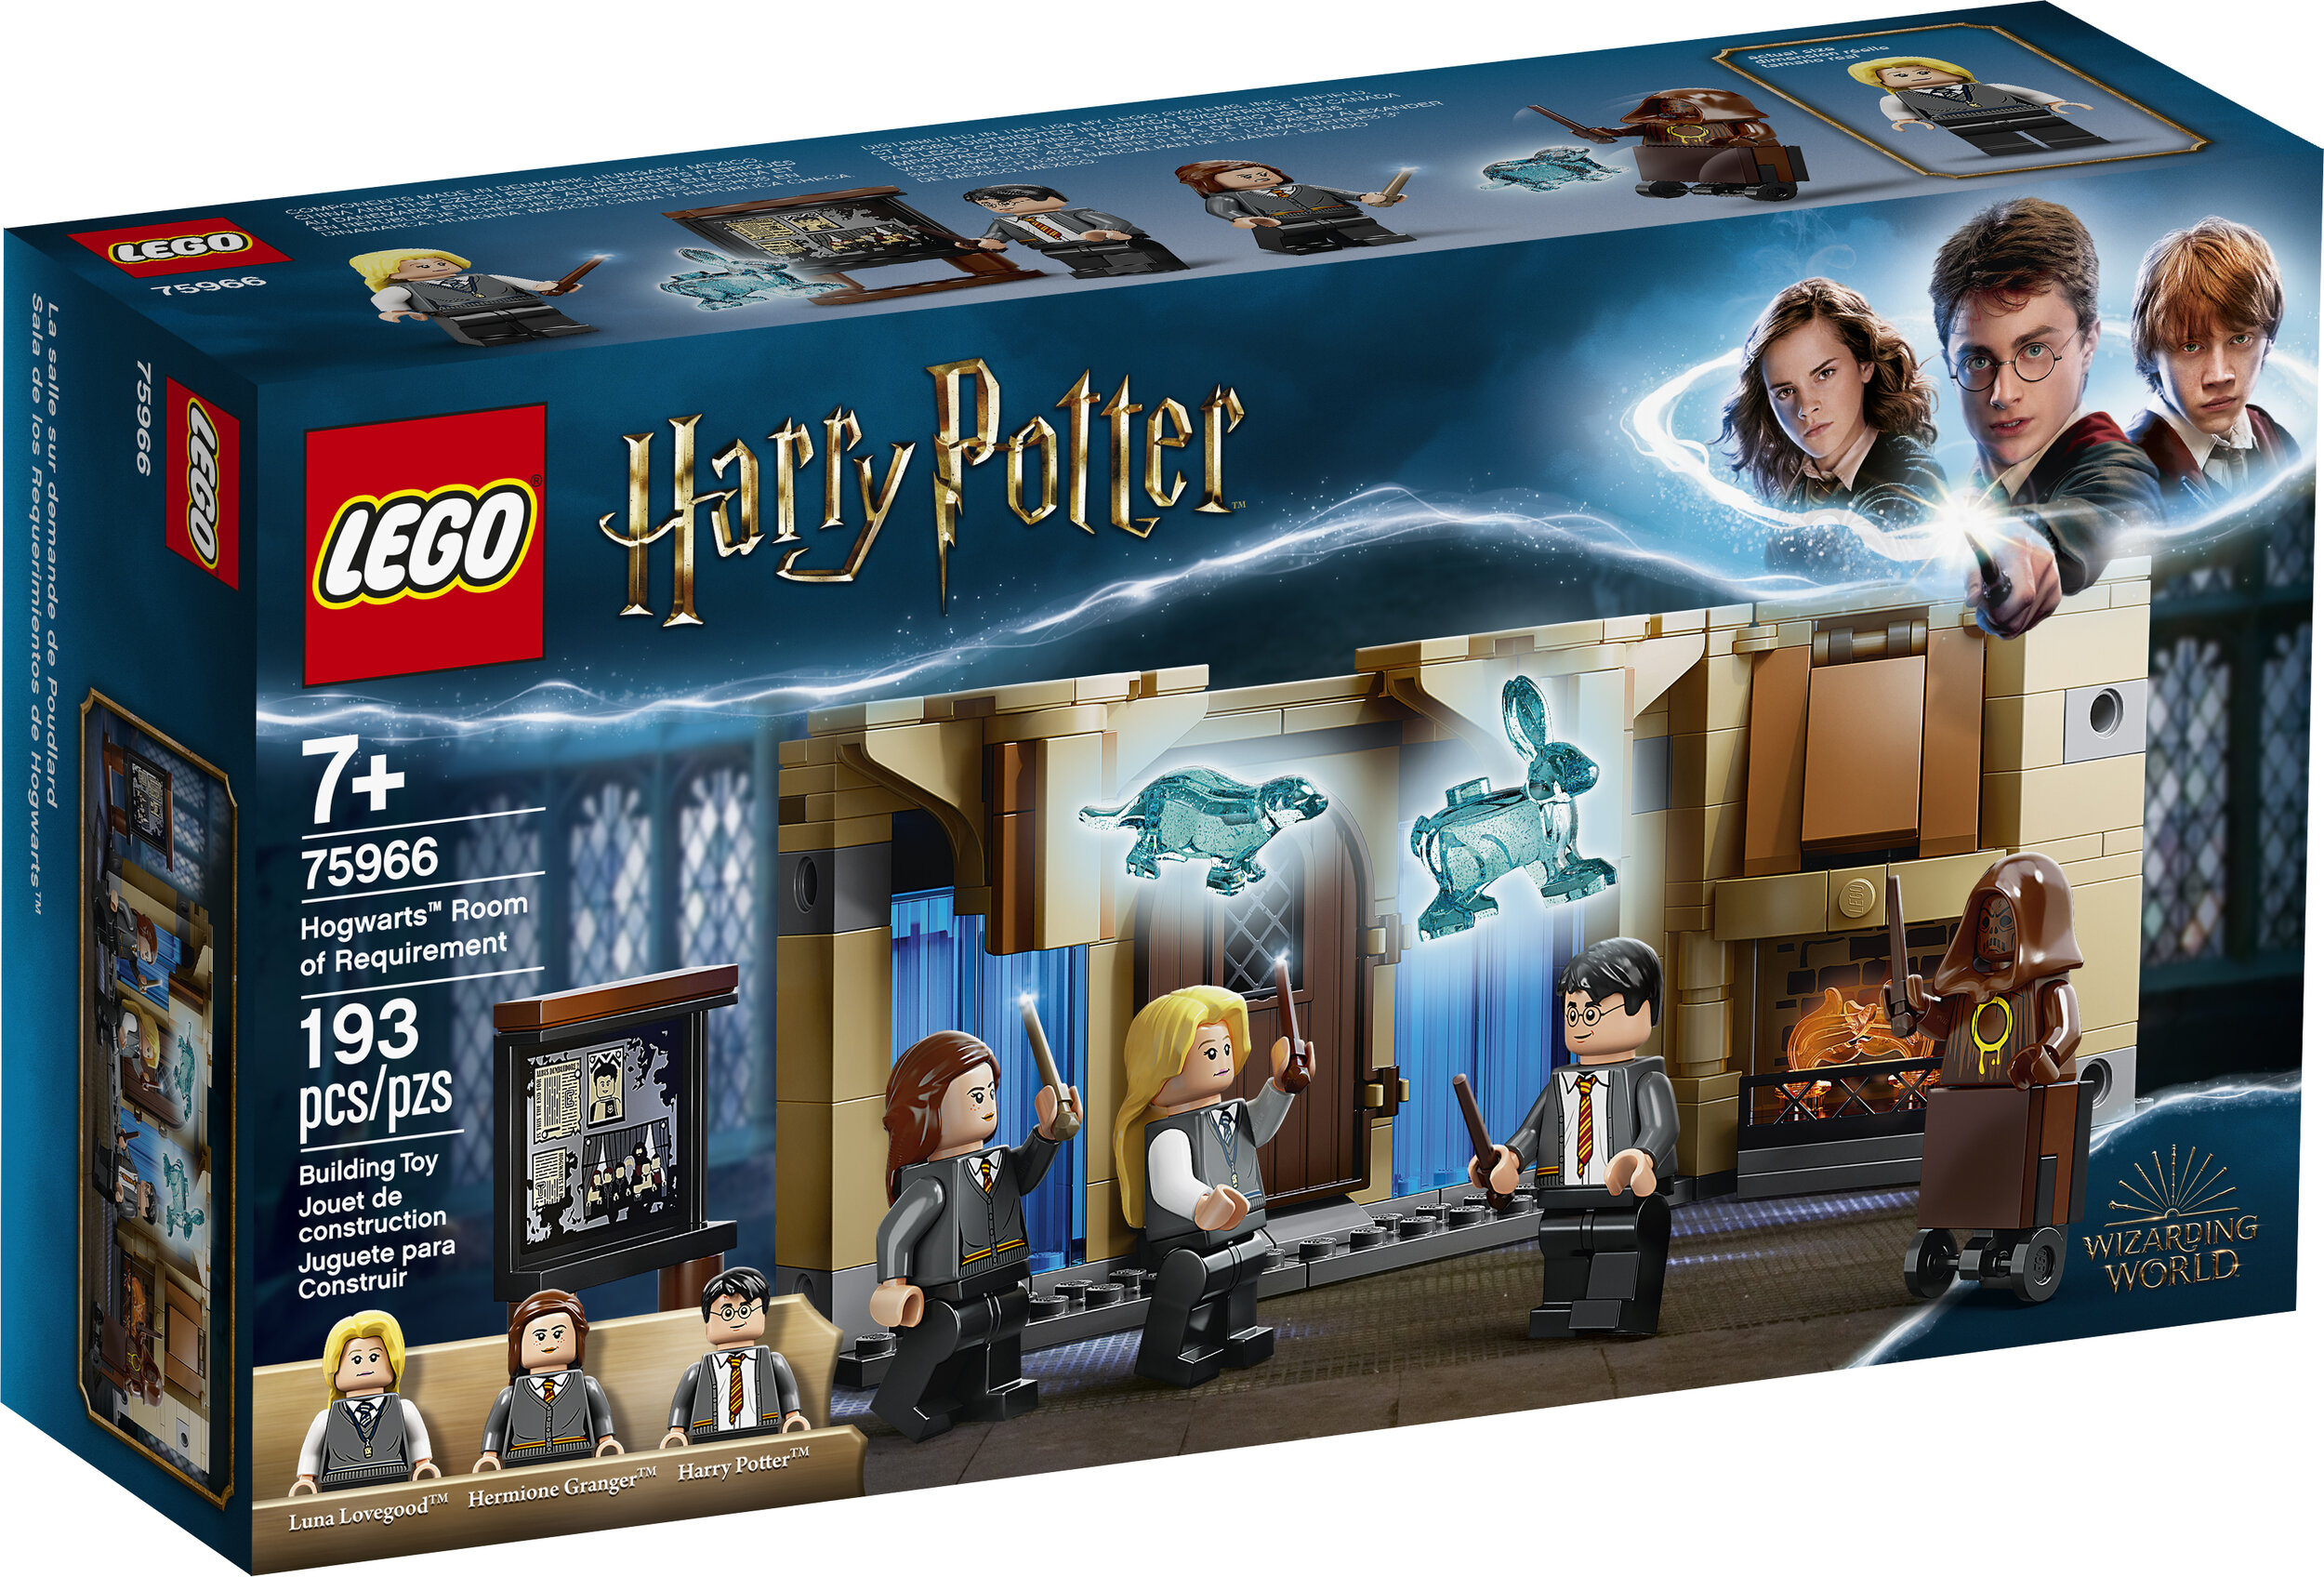 New LEGO Harry Potter Sets Unveiled